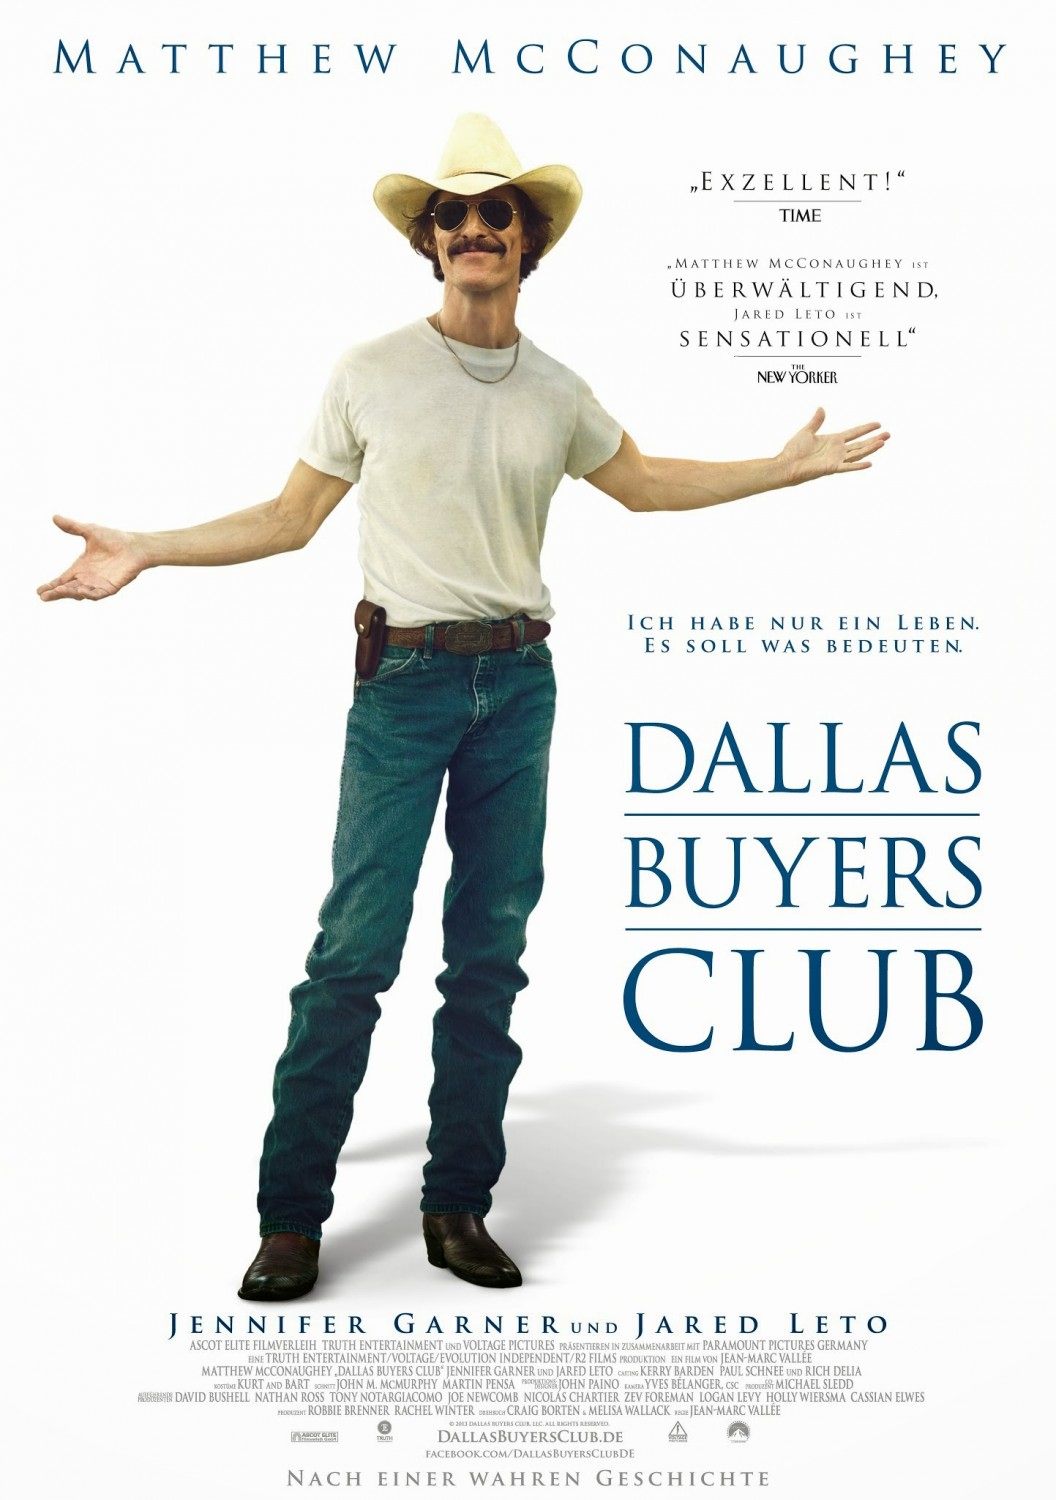 Dallas Buyers Club Backgrounds, Compatible - PC, Mobile, Gadgets| 1056x1500 px